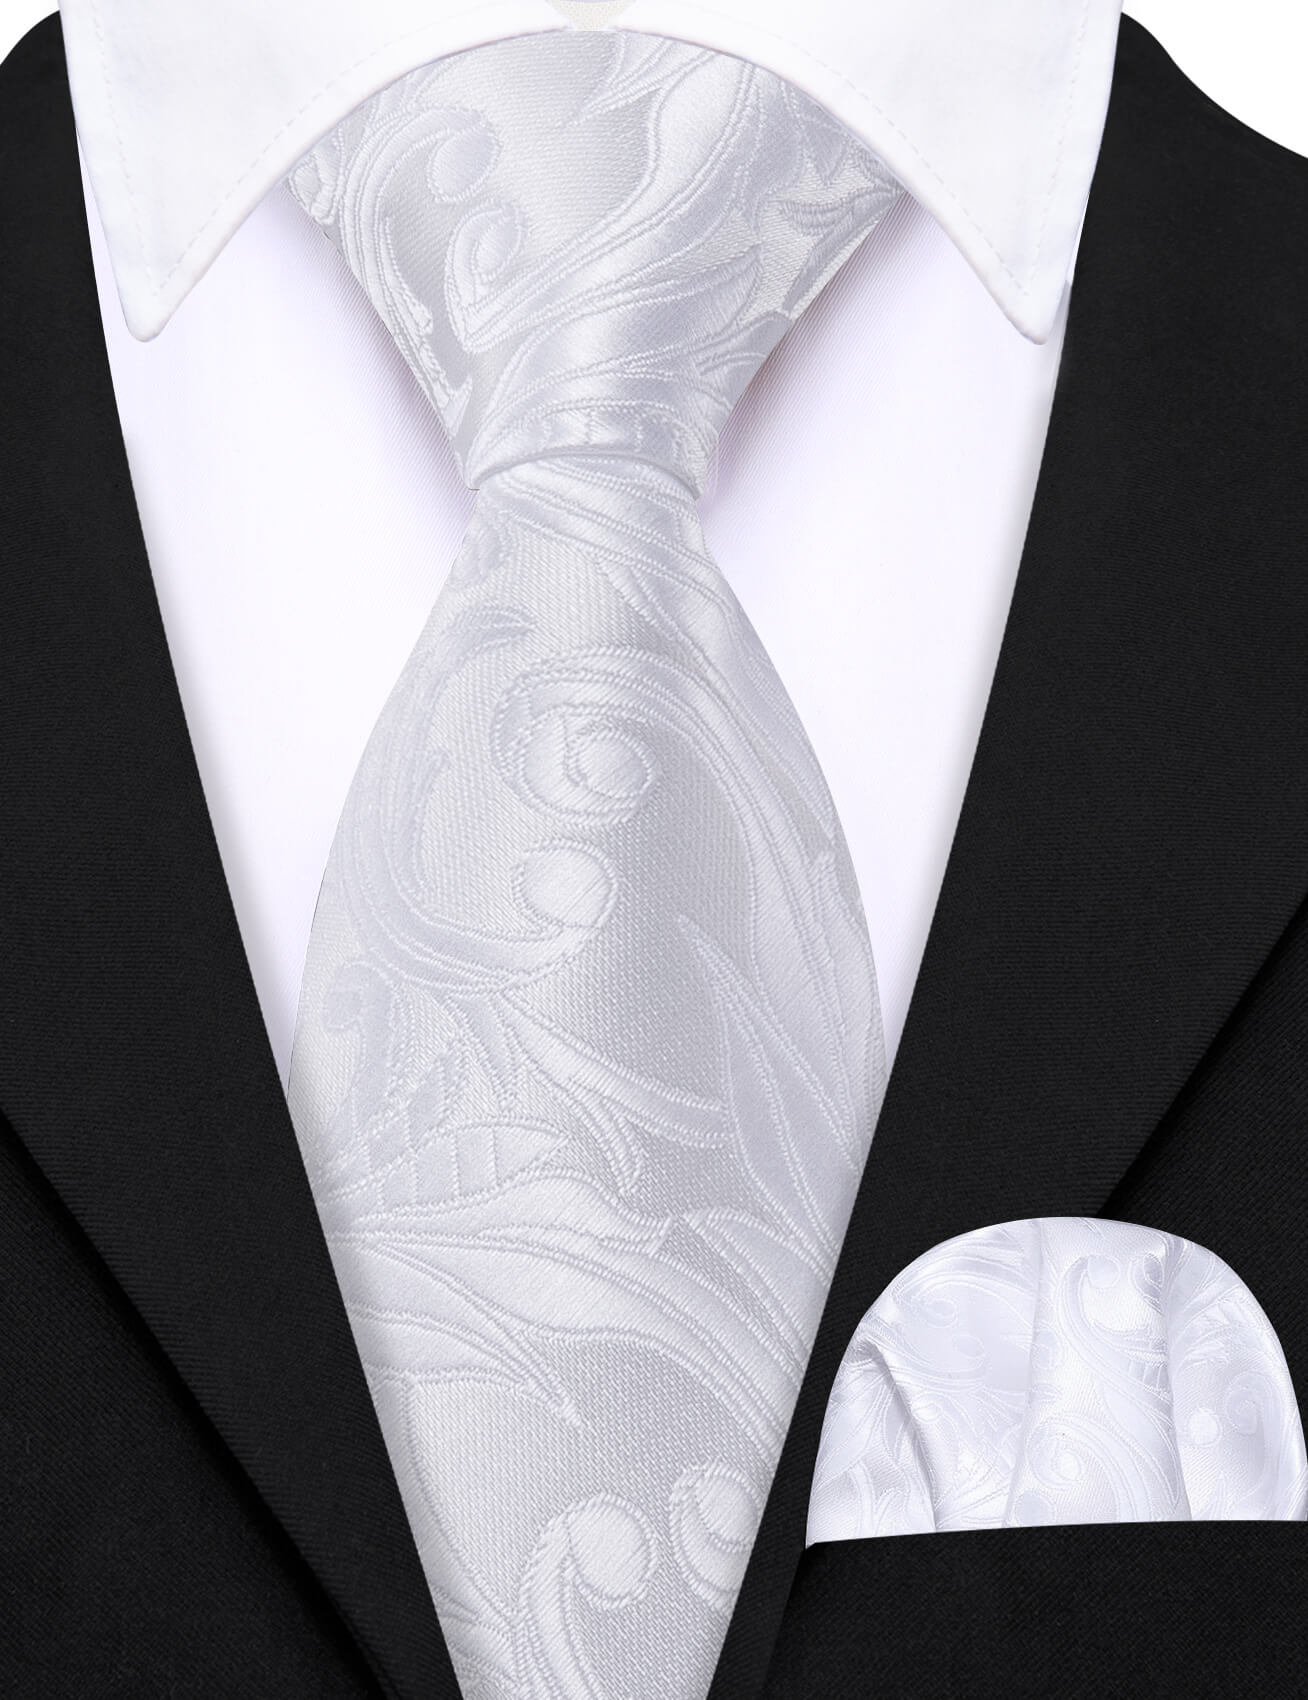 Barry.wang Floral Tie White Jacquard Children's Tie Handkerchief Set New Arrival